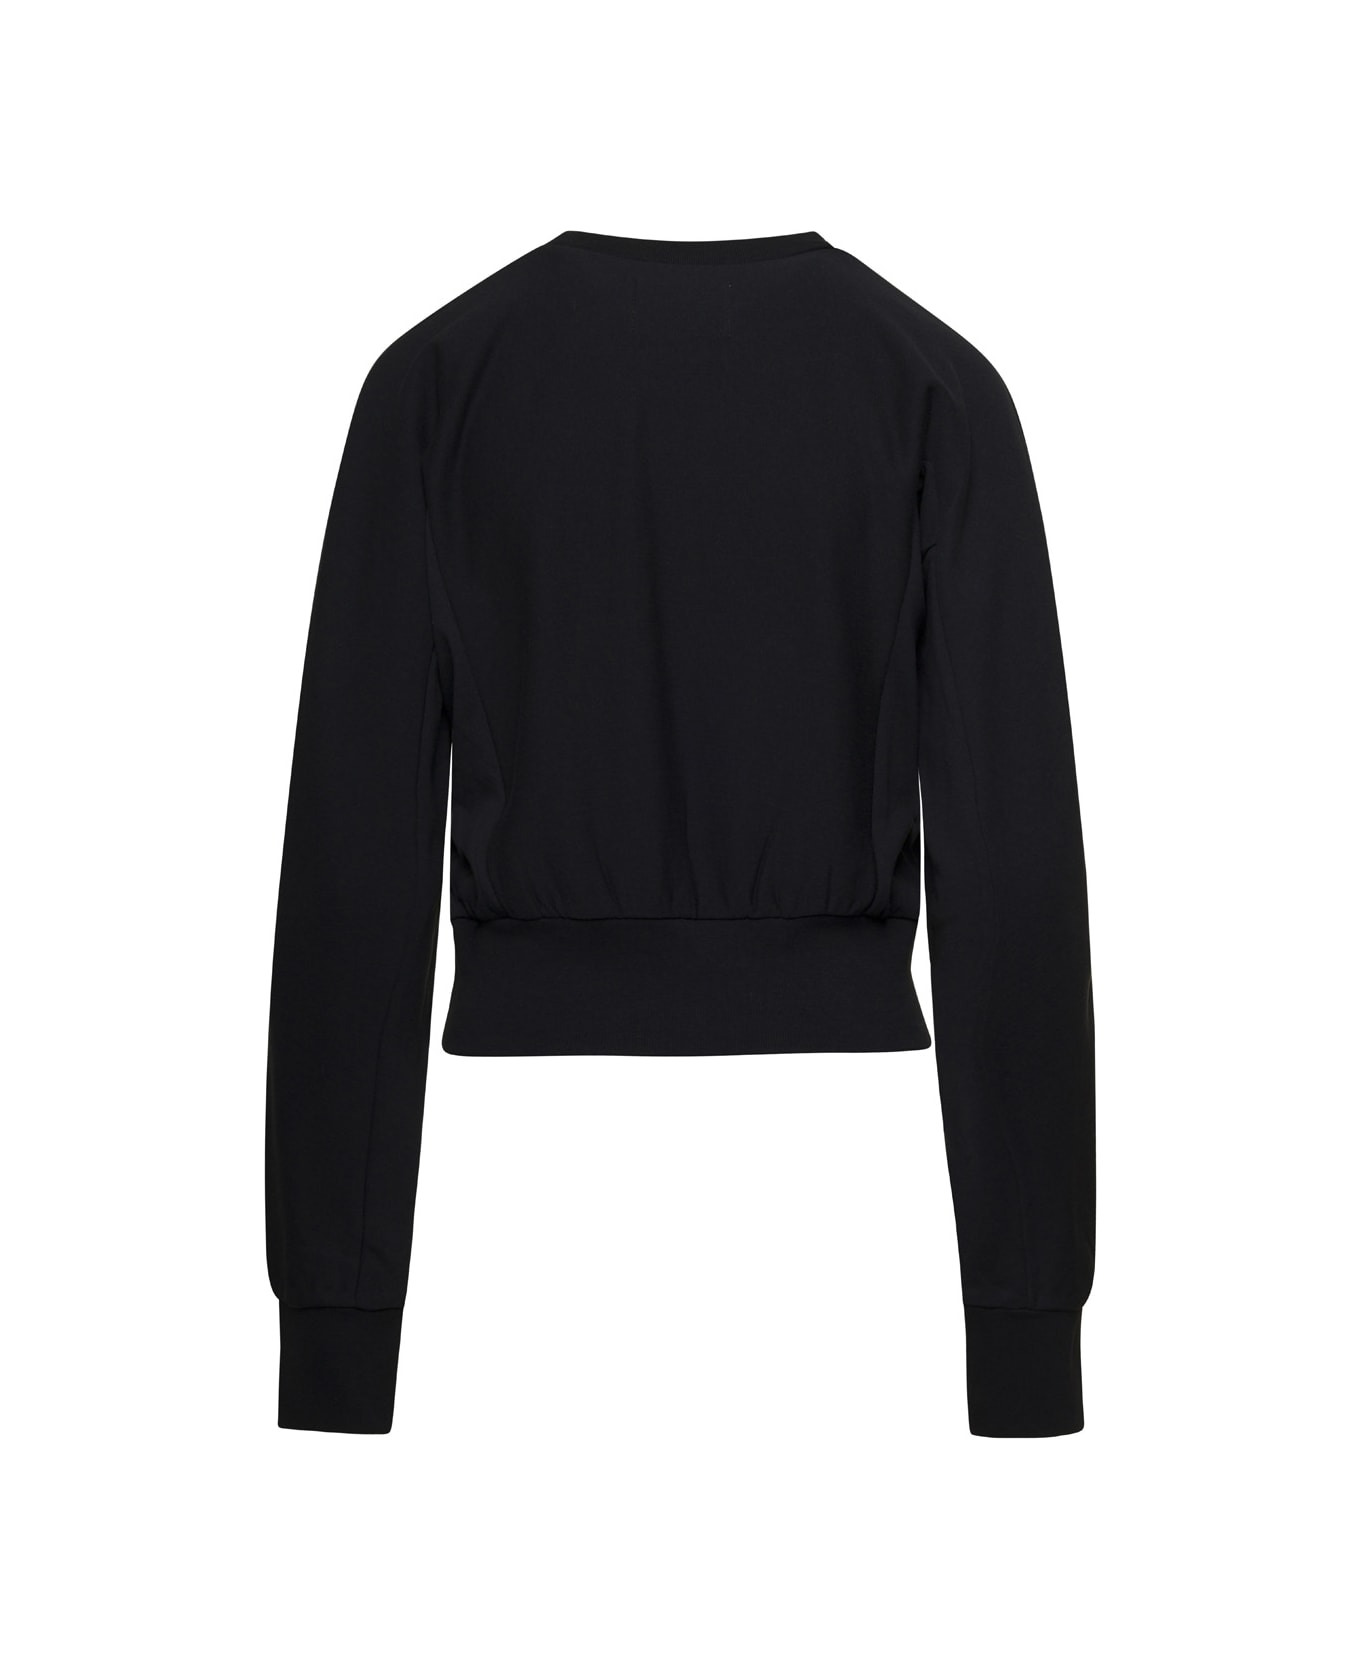 Vivienne Westwood Black Crewneck Sweatshirt With Embroidered Orb Logo In Cotton Woman - Black